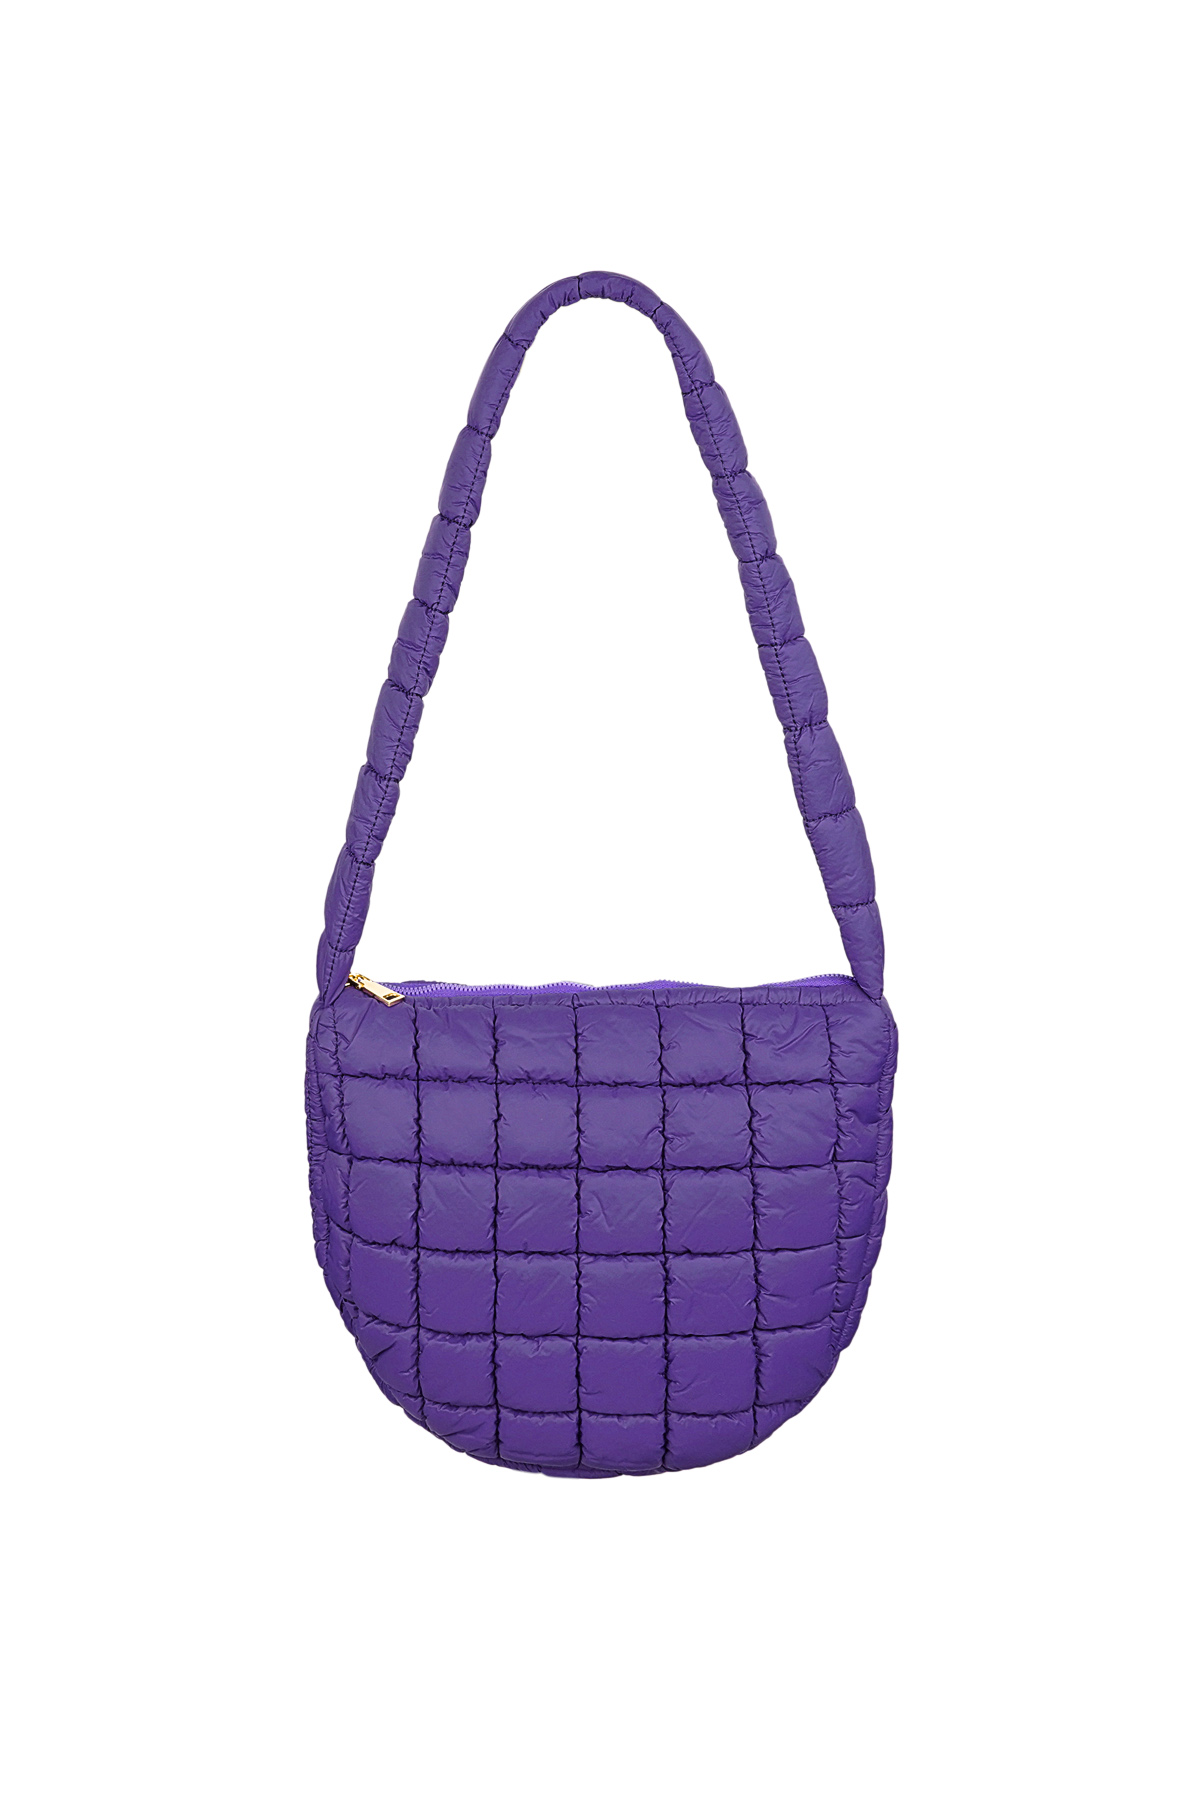 Pancake city bag - purple h5 